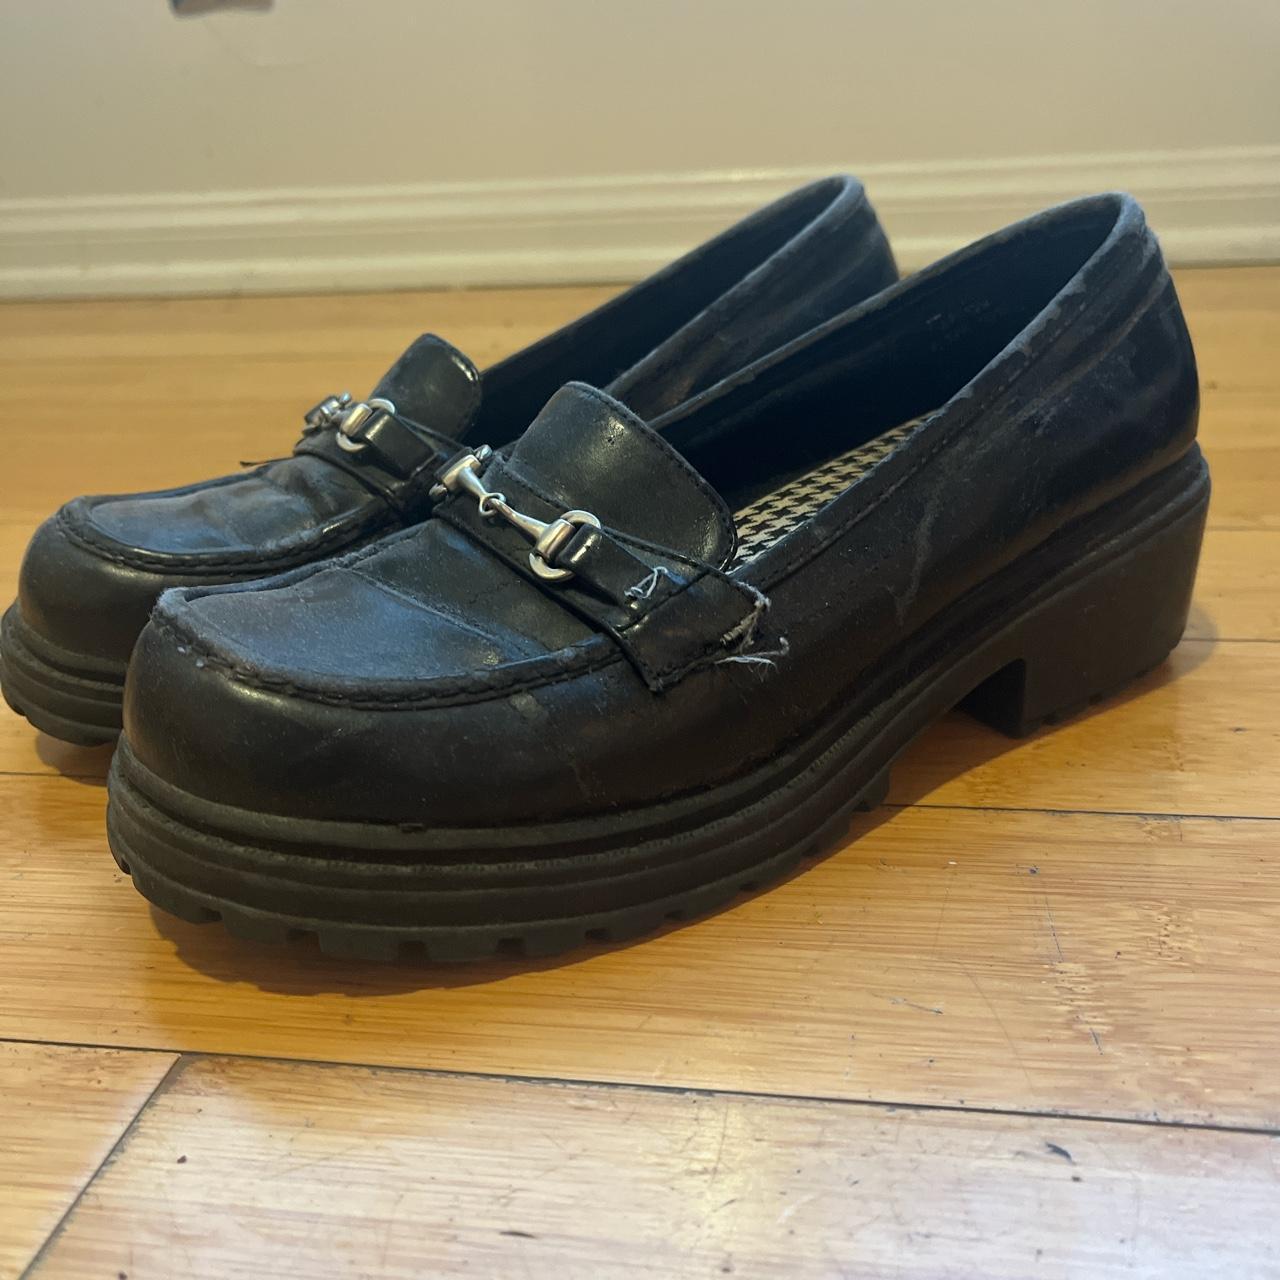 Union Bay Women's Black Loafers (2)